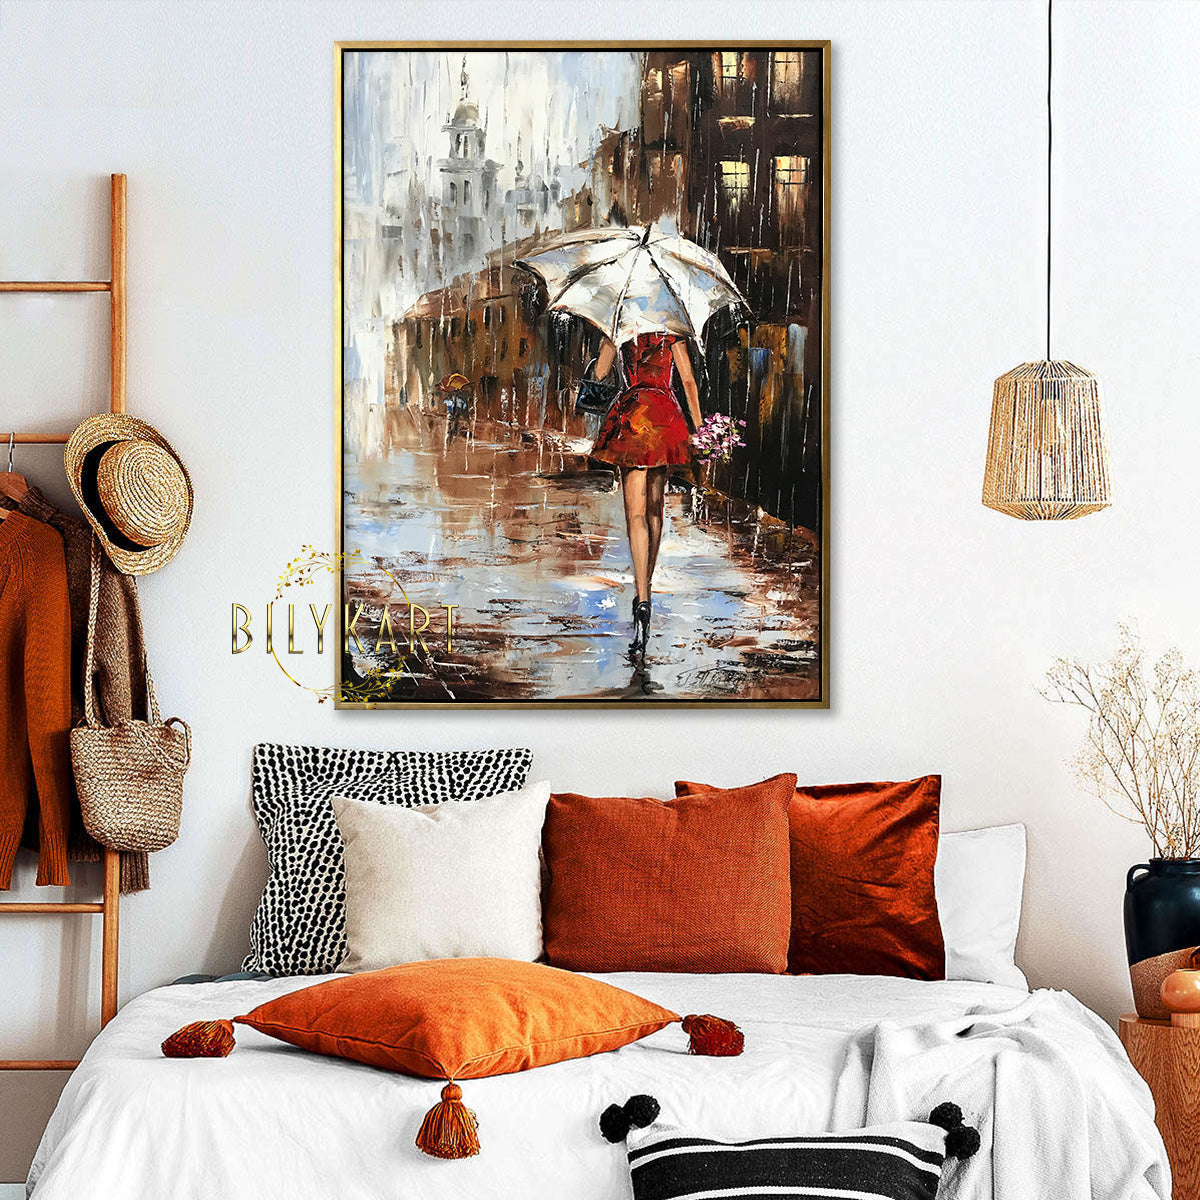 Large Abstract Rainy Umbrella Art Girl Under Umbrella Painting on Canvas Rainy City Art Fall Canvas Wall Decor Girl Walking in Rain Oil Painting 40x60